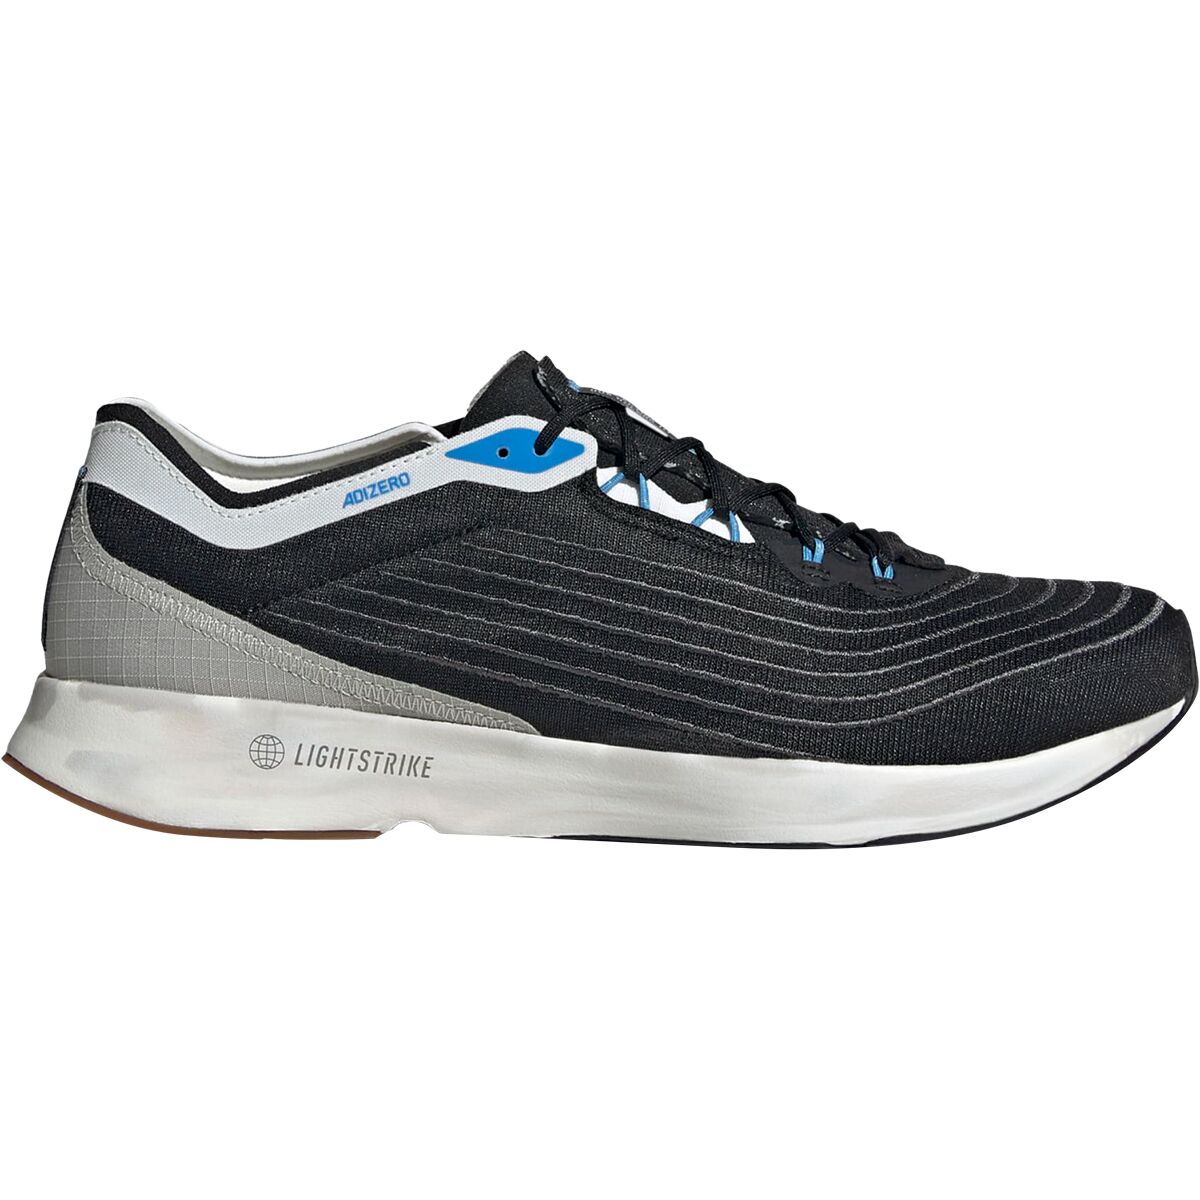 Adidas Adizero x Parley Running Shoe - Men's